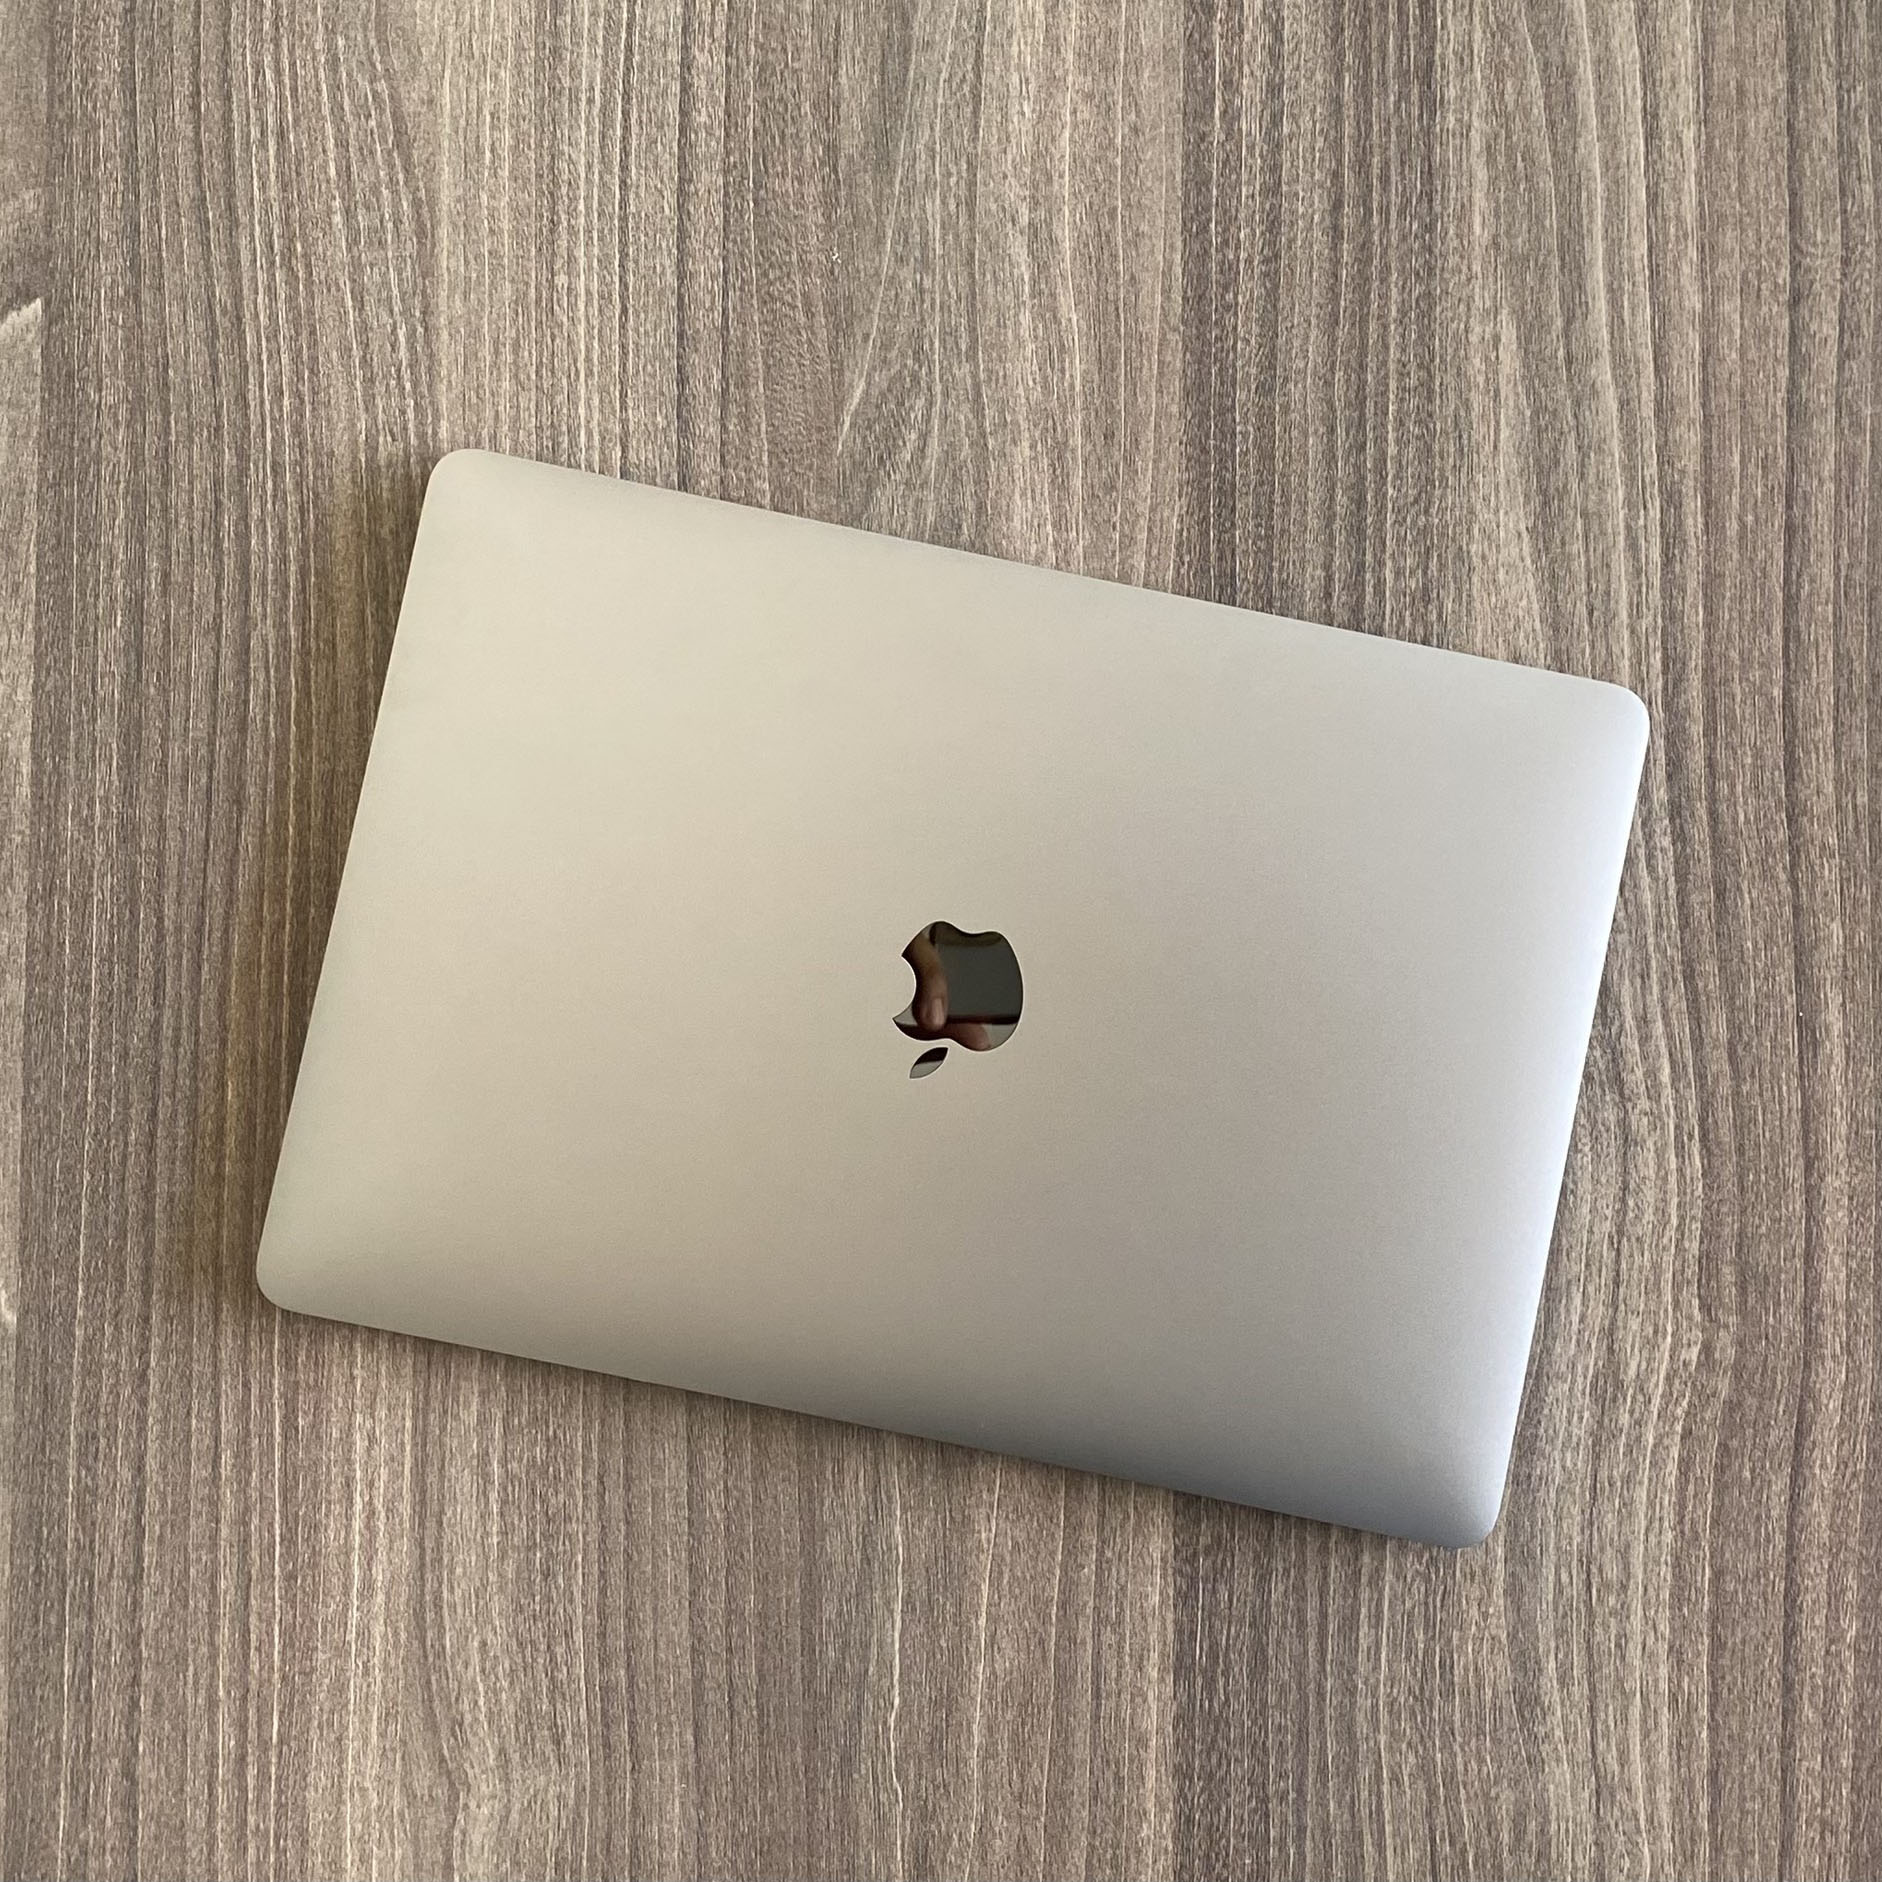 MacBook Pro (13-inch, 2019, Two Thunderbolt 3 ports) Core i5